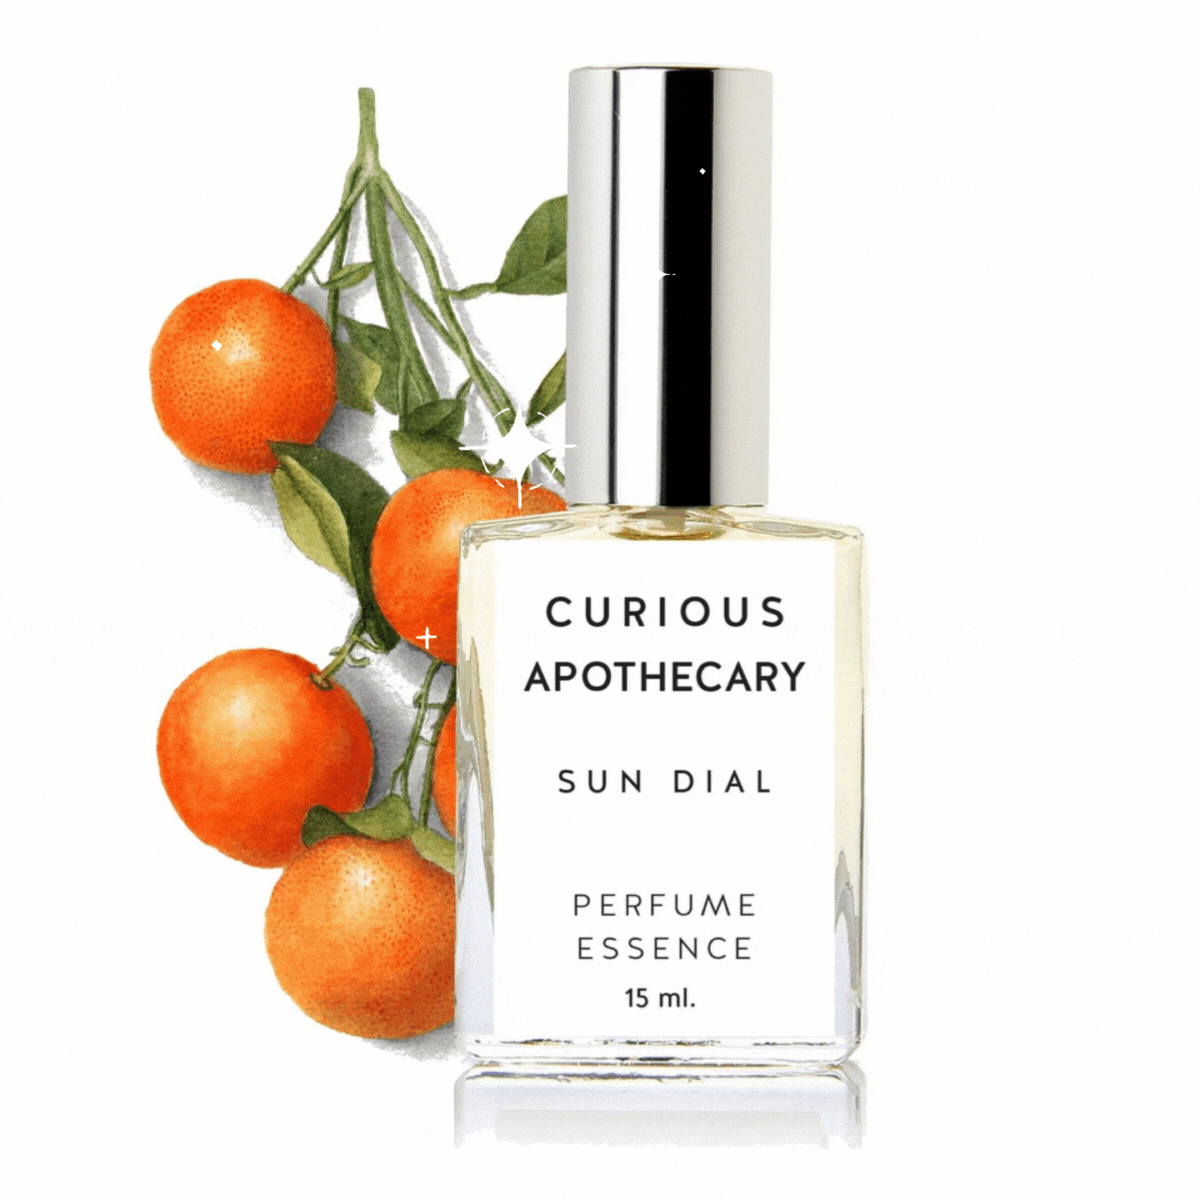 Sun Dial™ Fresh Orange Blossom Perfume by Curious Apothecary. - theme  fragrance